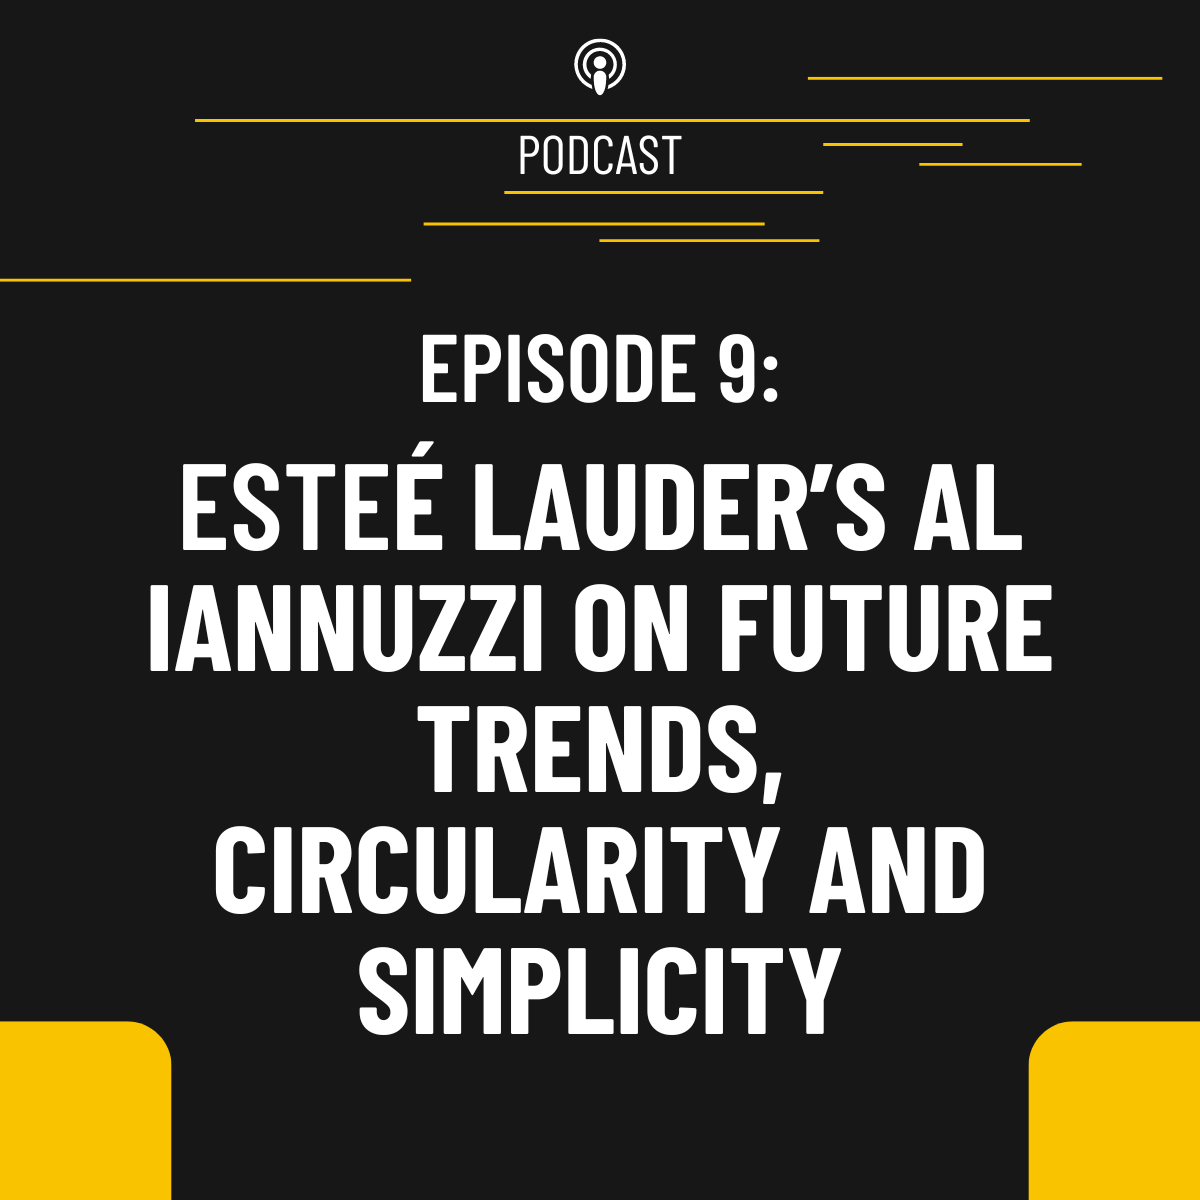 Episode 9: Esteé Lauder's Al Iannuzzi on future trends, circularity and simplicity